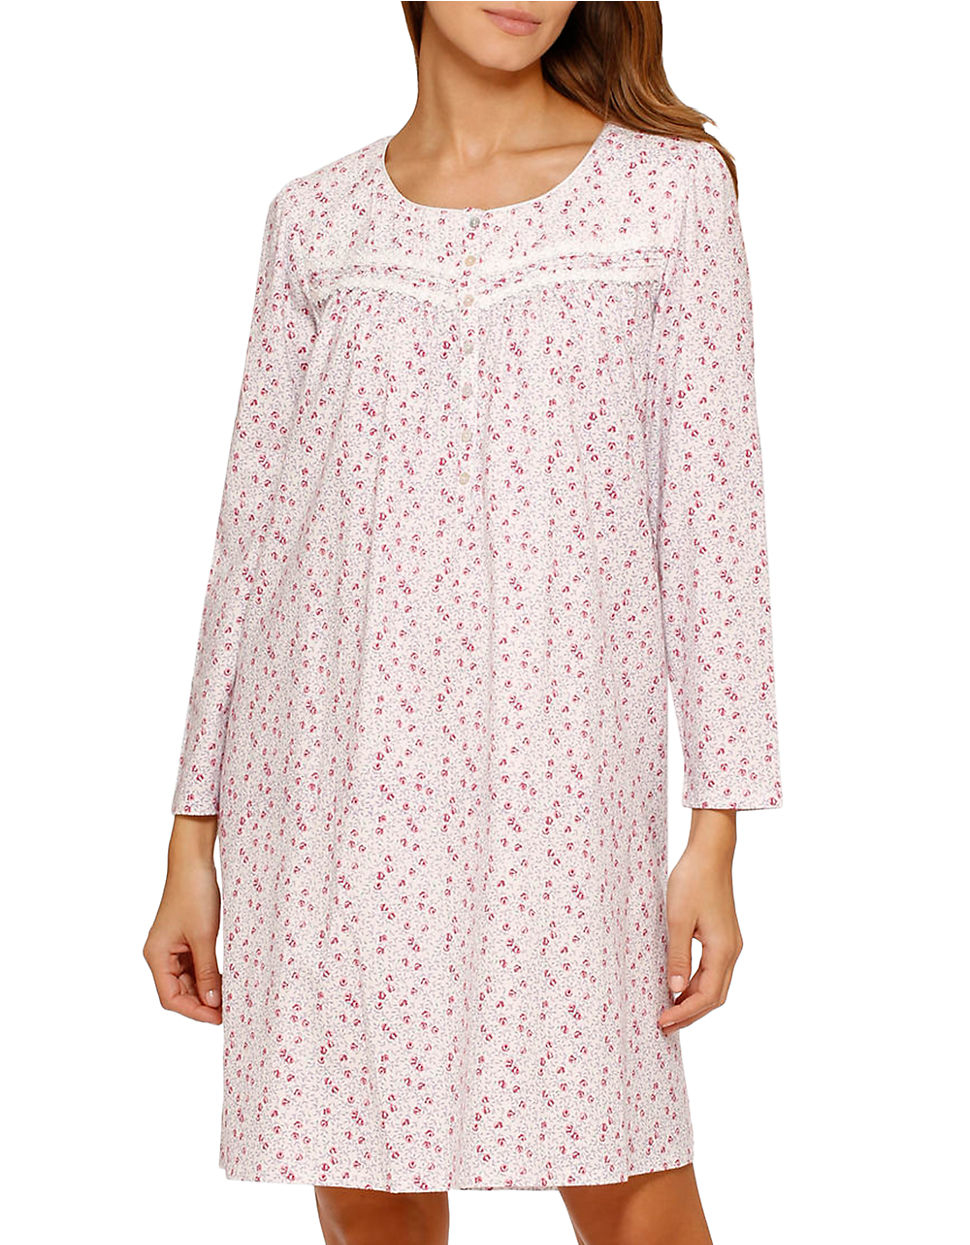 Lyst - Eileen west Long Sleeve Short Nightgown